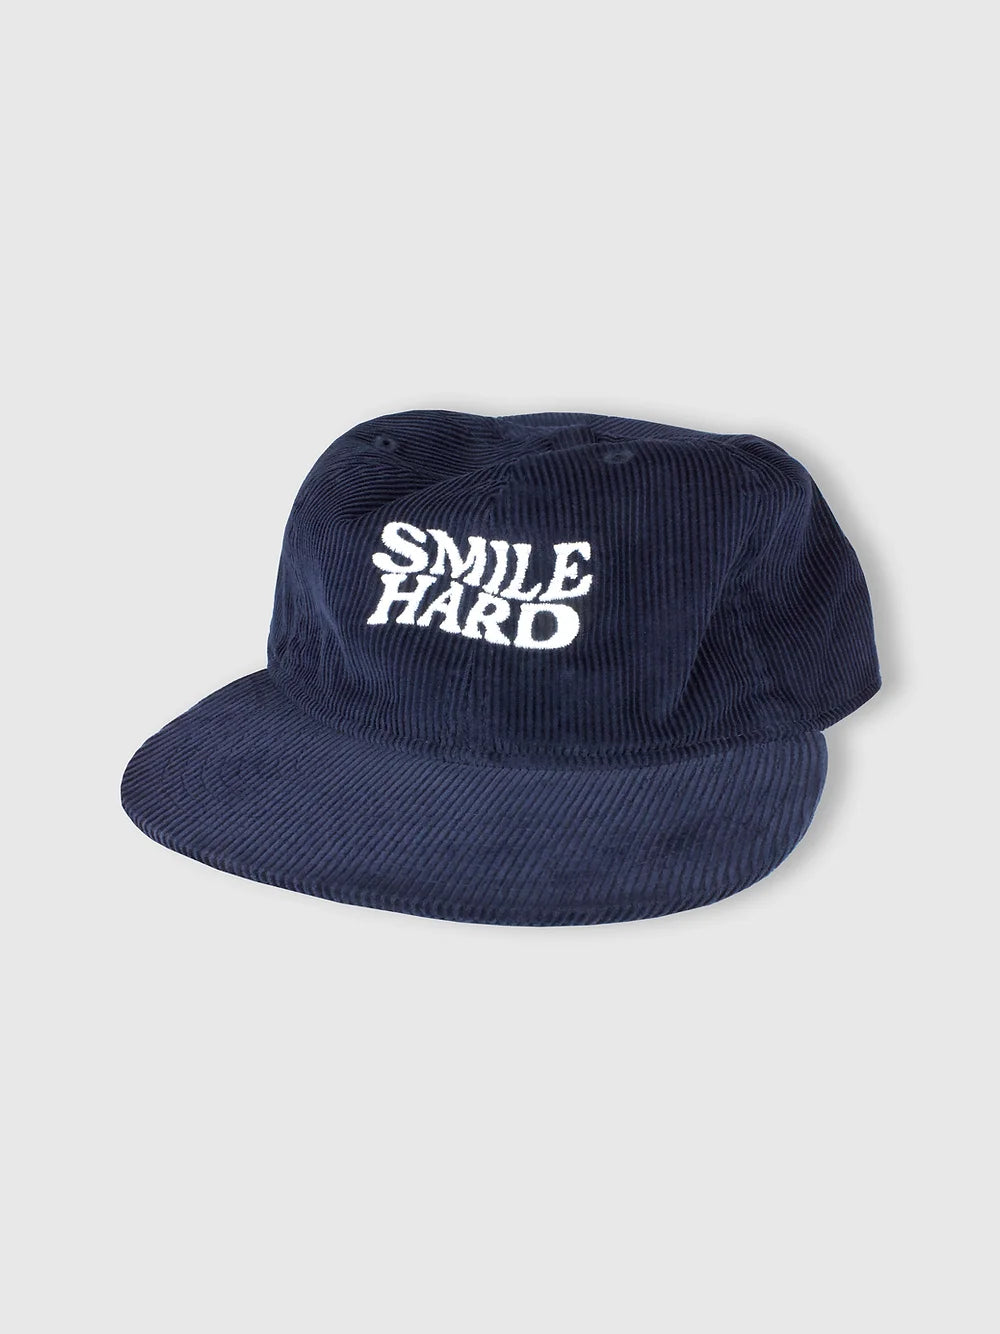 Navy Smile Hard Hat